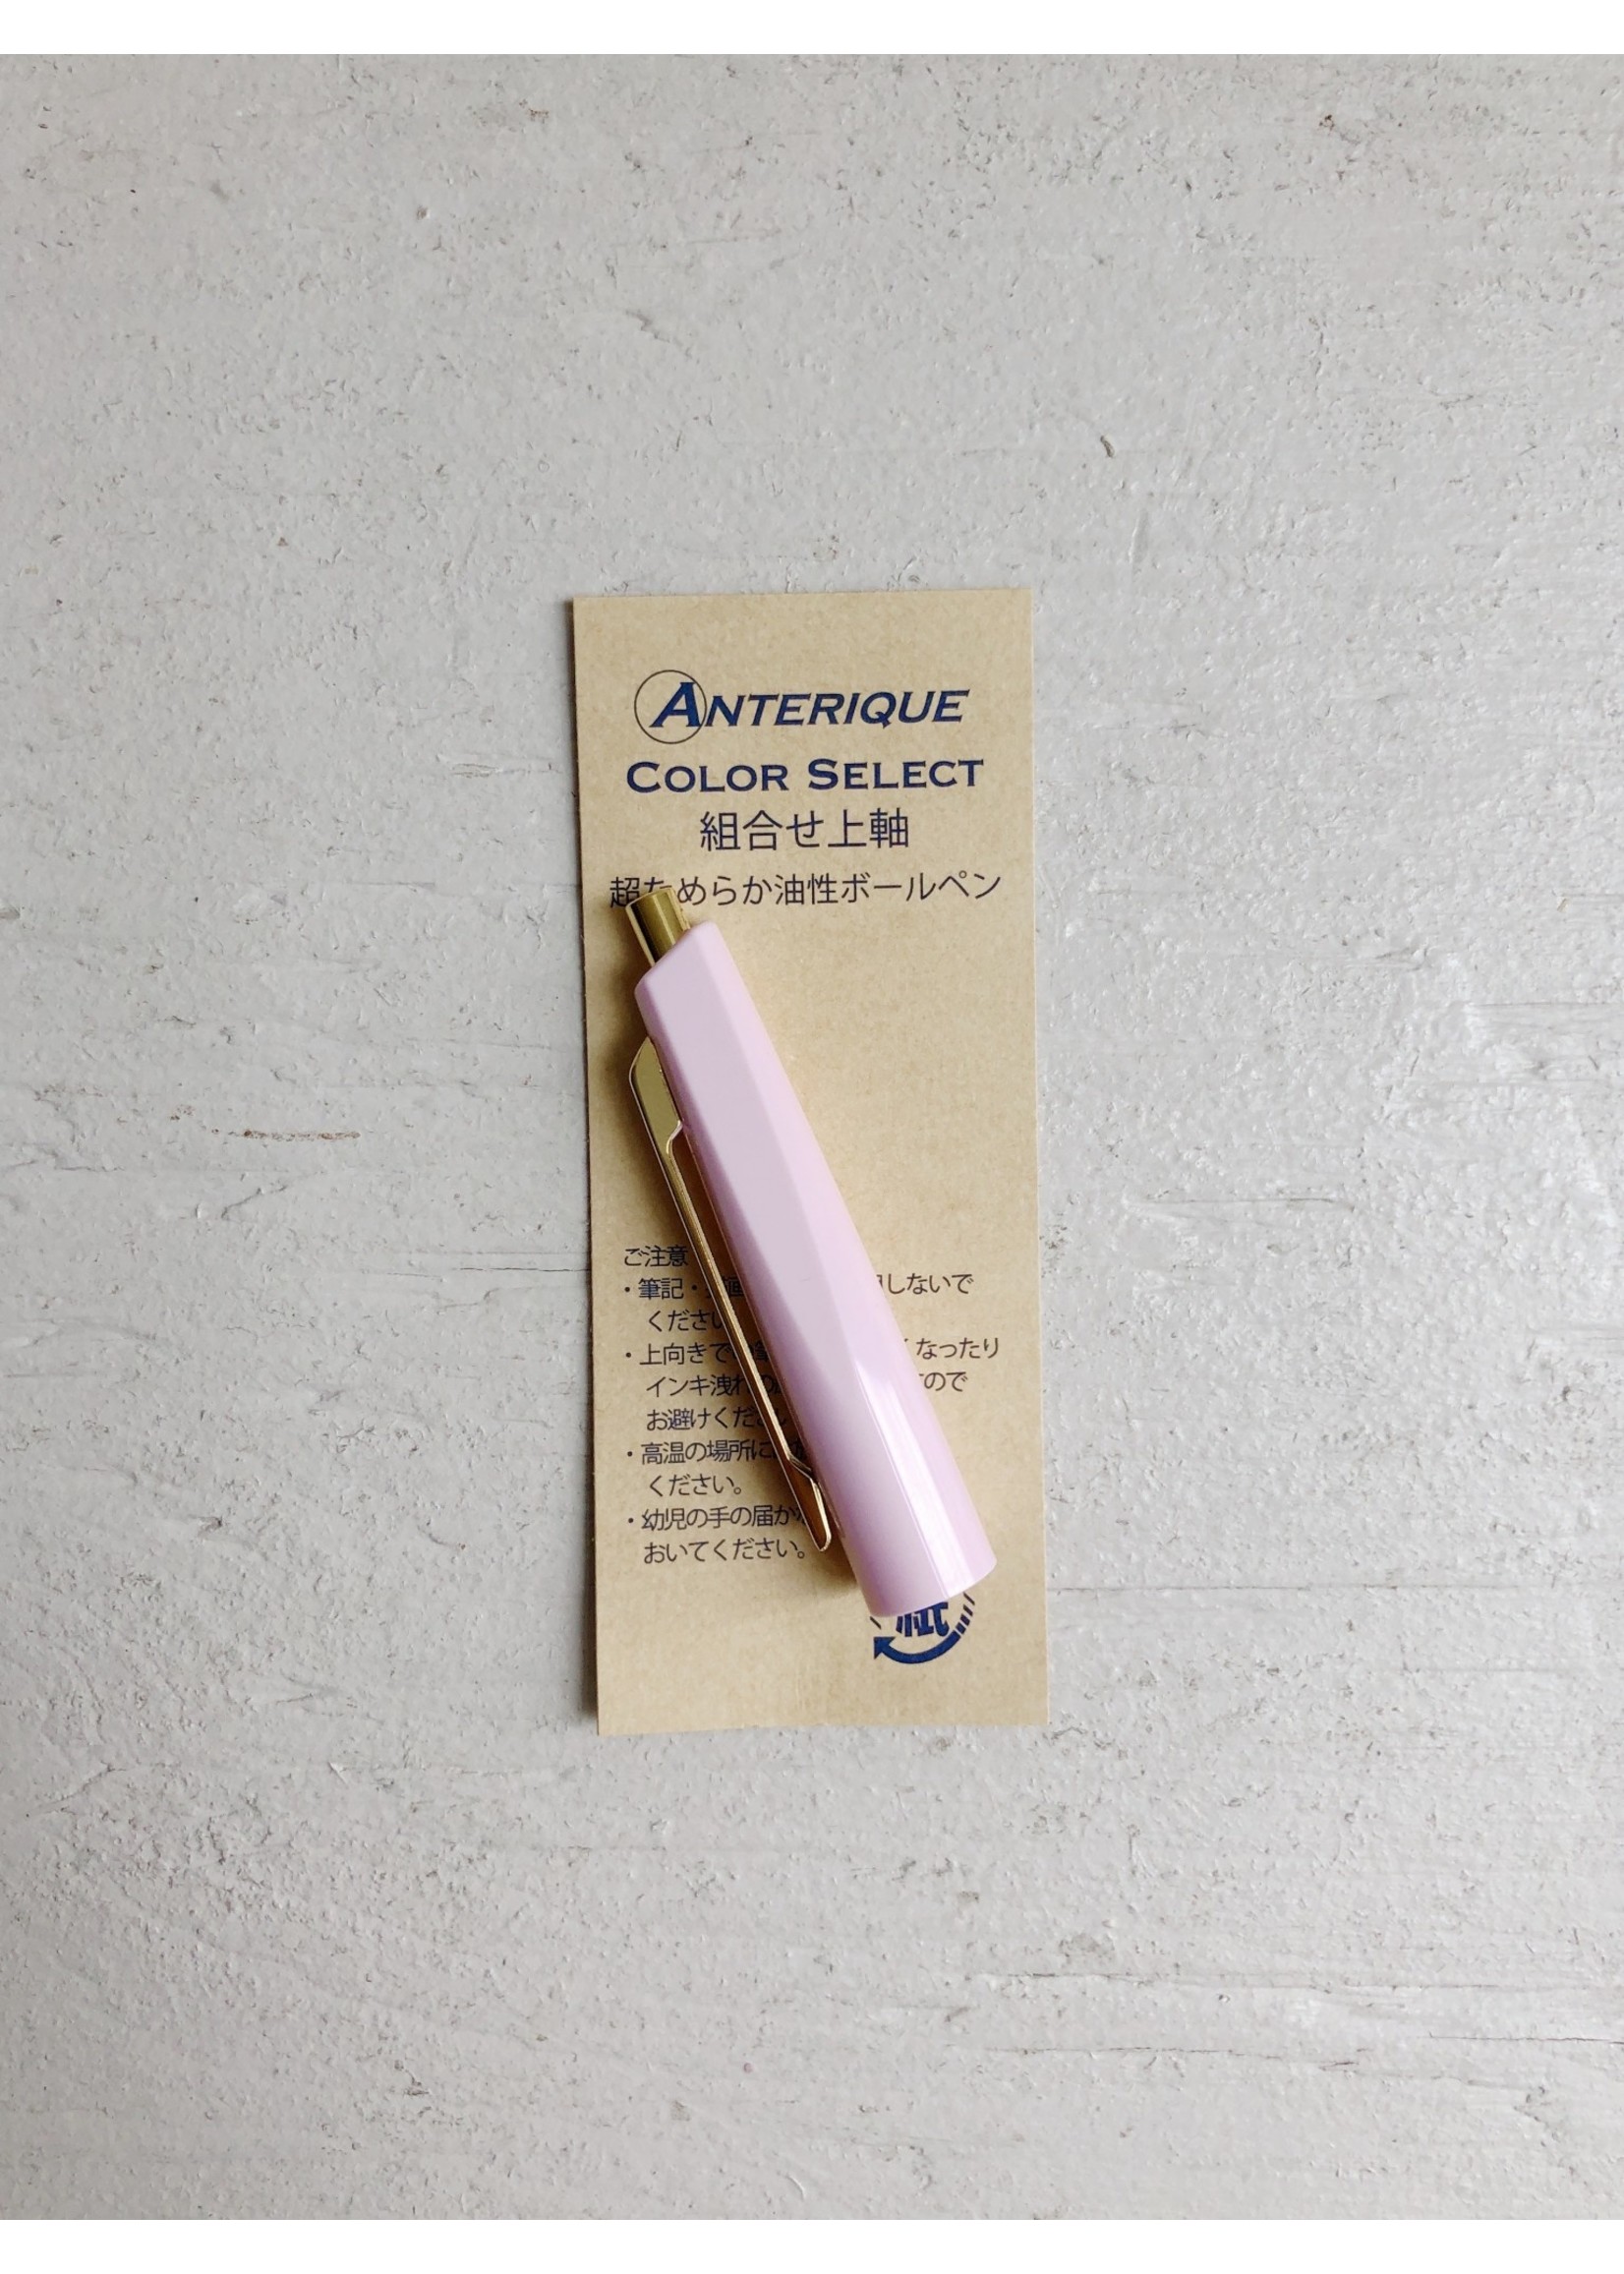 Anterique Upper Body Ballpoint Pen by Anterique